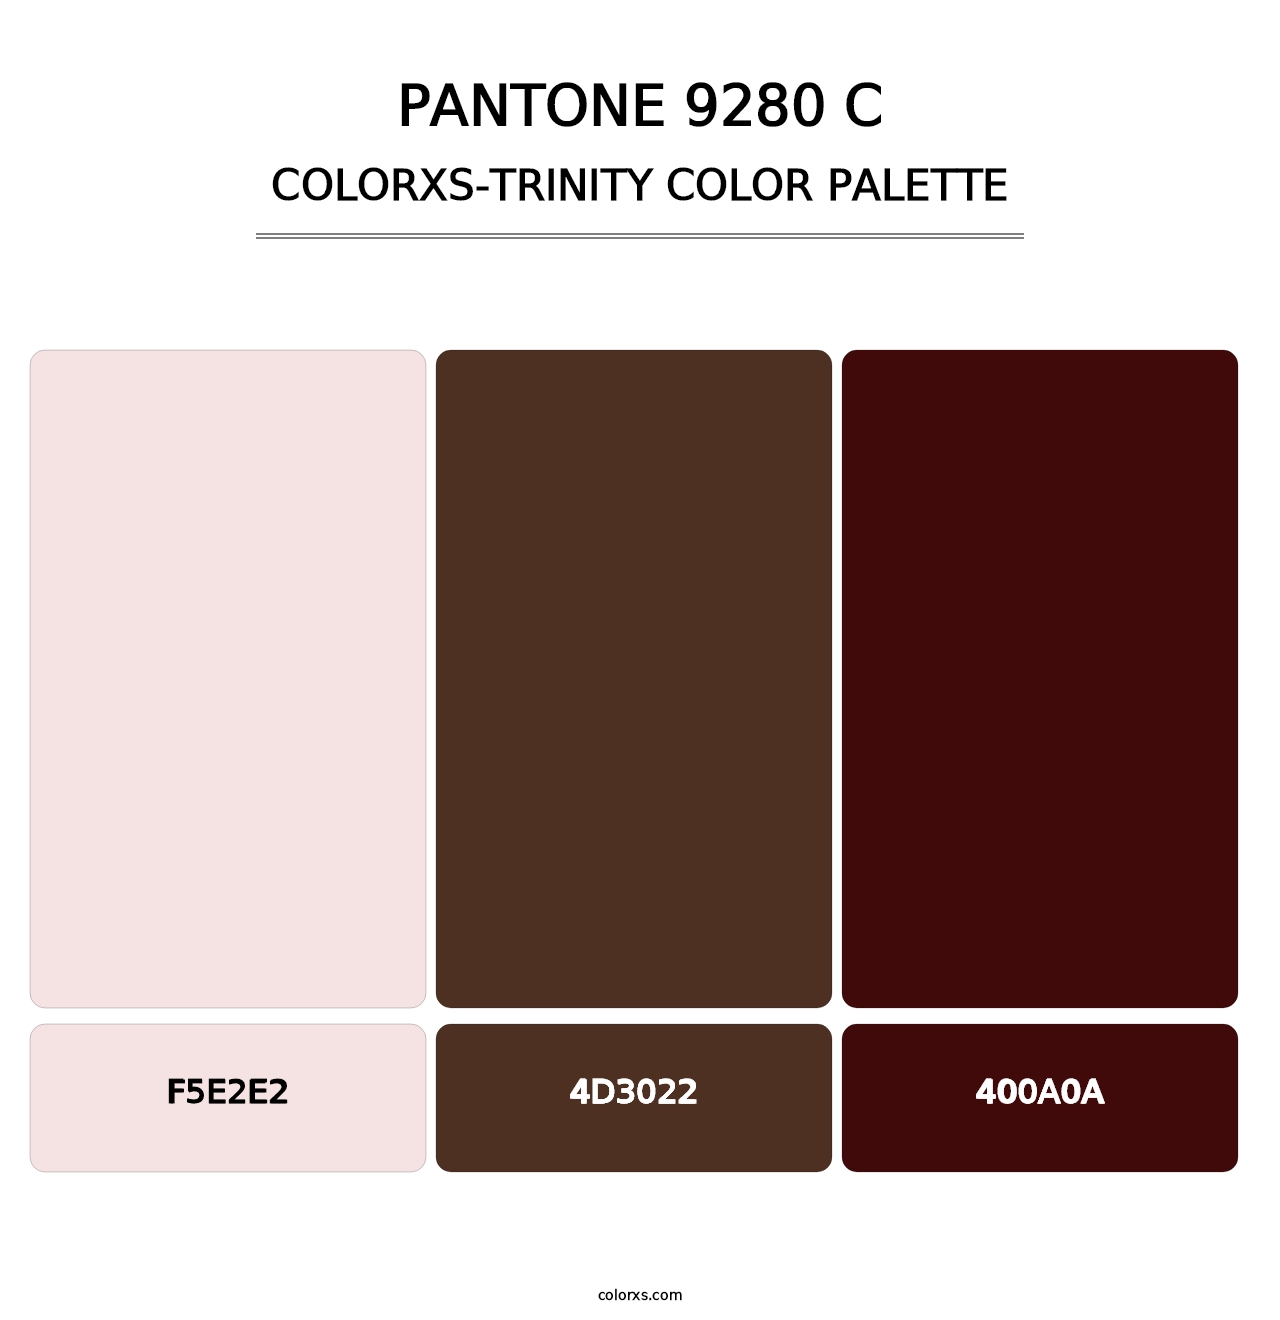 PANTONE 9280 C - Colorxs Trinity Palette